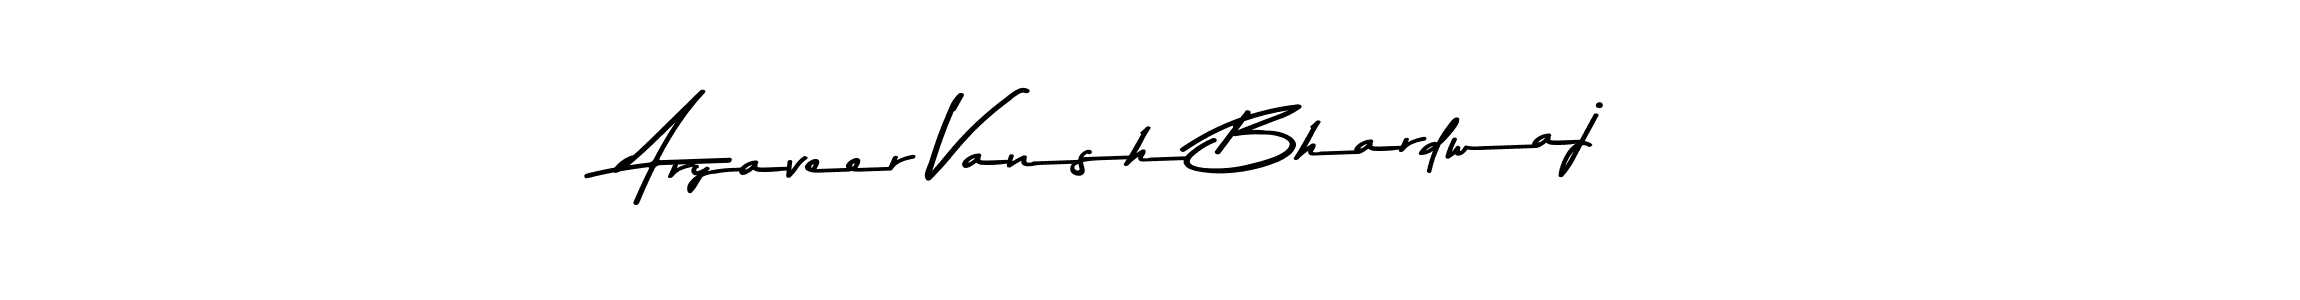 Aryaveer Vansh Bhardwaj stylish signature style. Best Handwritten Sign (Asem Kandis PERSONAL USE) for my name. Handwritten Signature Collection Ideas for my name Aryaveer Vansh Bhardwaj. Aryaveer Vansh Bhardwaj signature style 9 images and pictures png